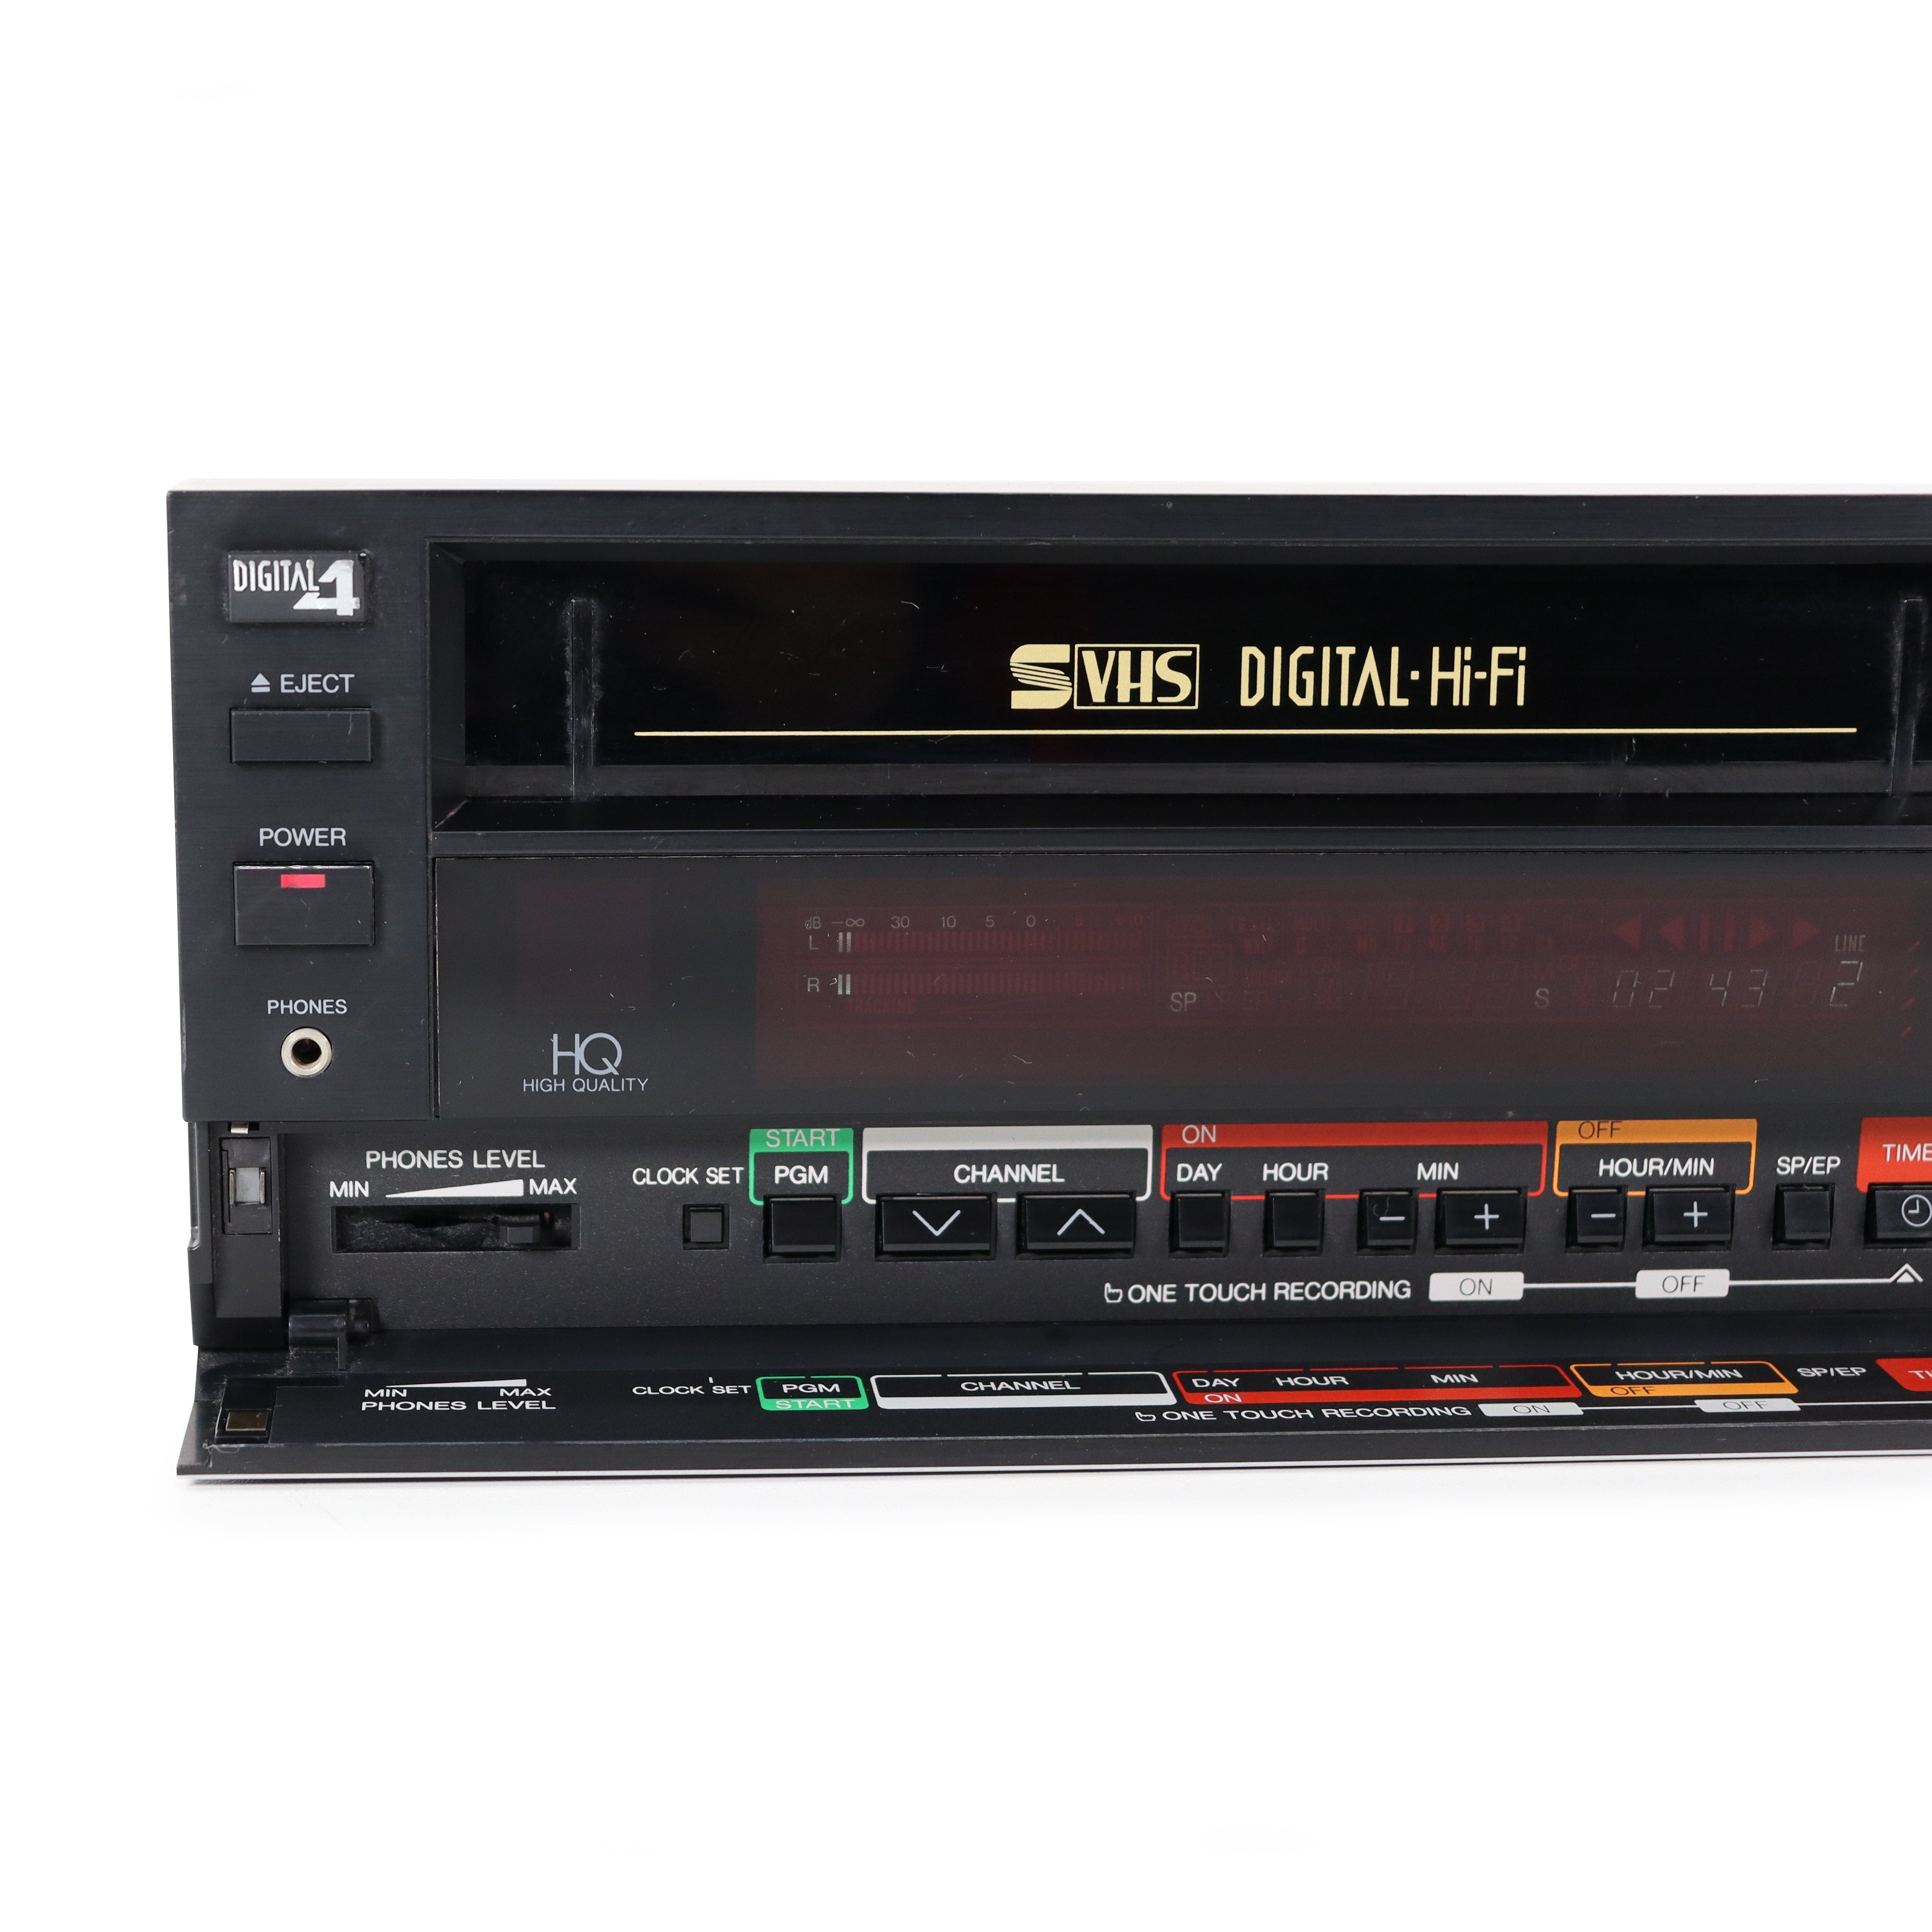 Toshiba SD-V390 DVD Video Player / Video Cassette Recorder VHS HI-FI